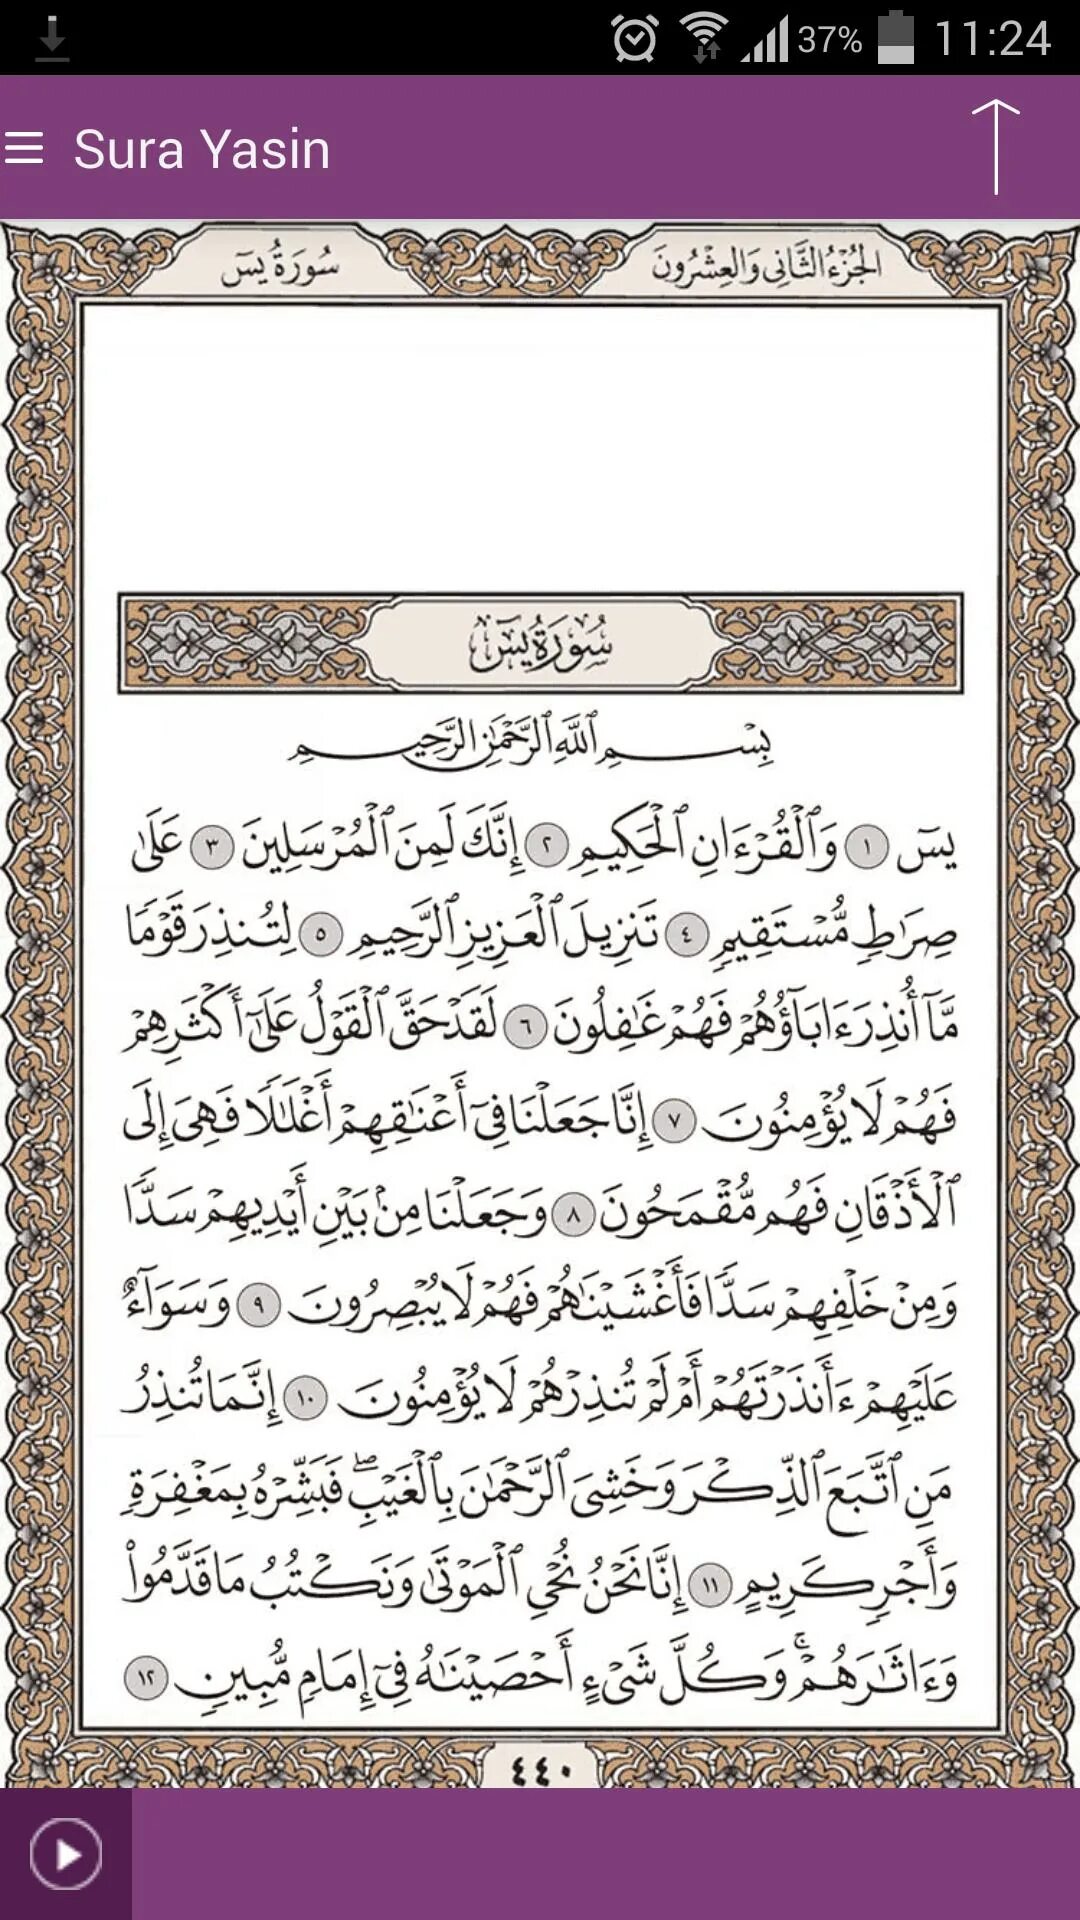 Коран Сура ясин. Сура ясин 1 Мубин. Ясин Коран 2 страниц. Сура ясин 1 и 2 Мубин.